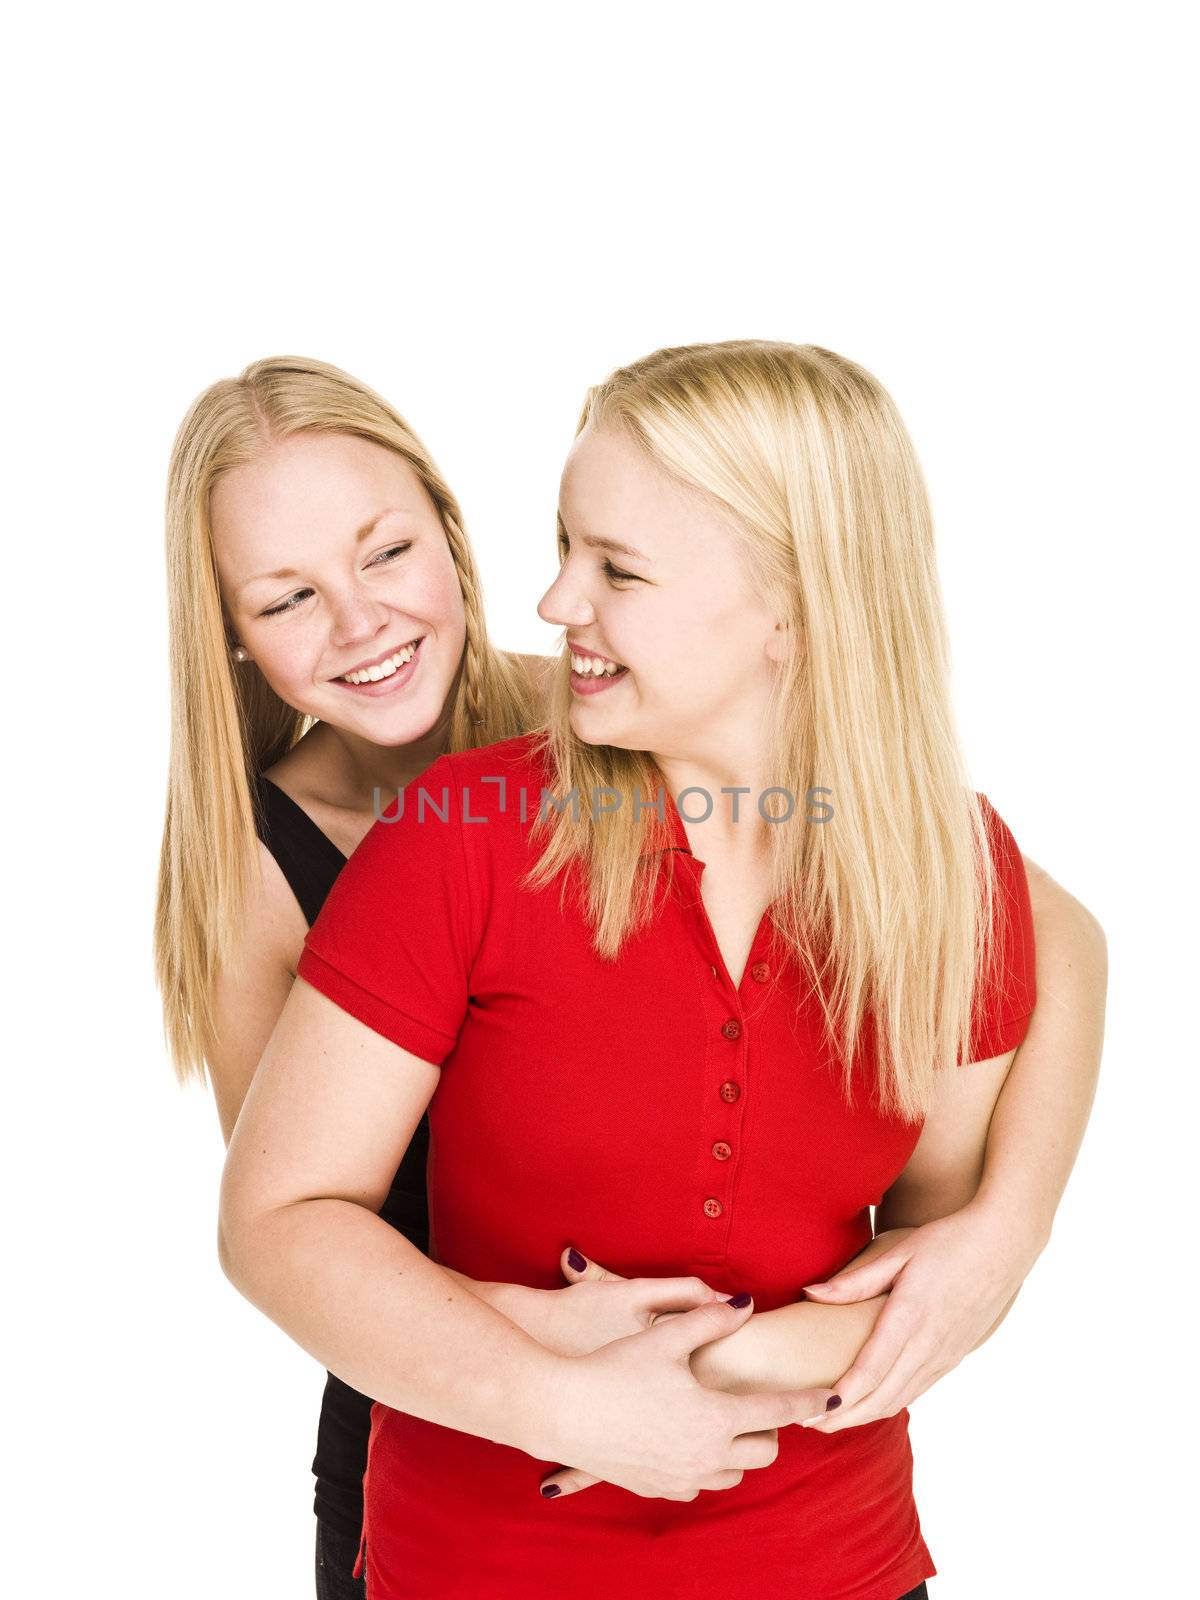 Two bonding Girls isolated on white background